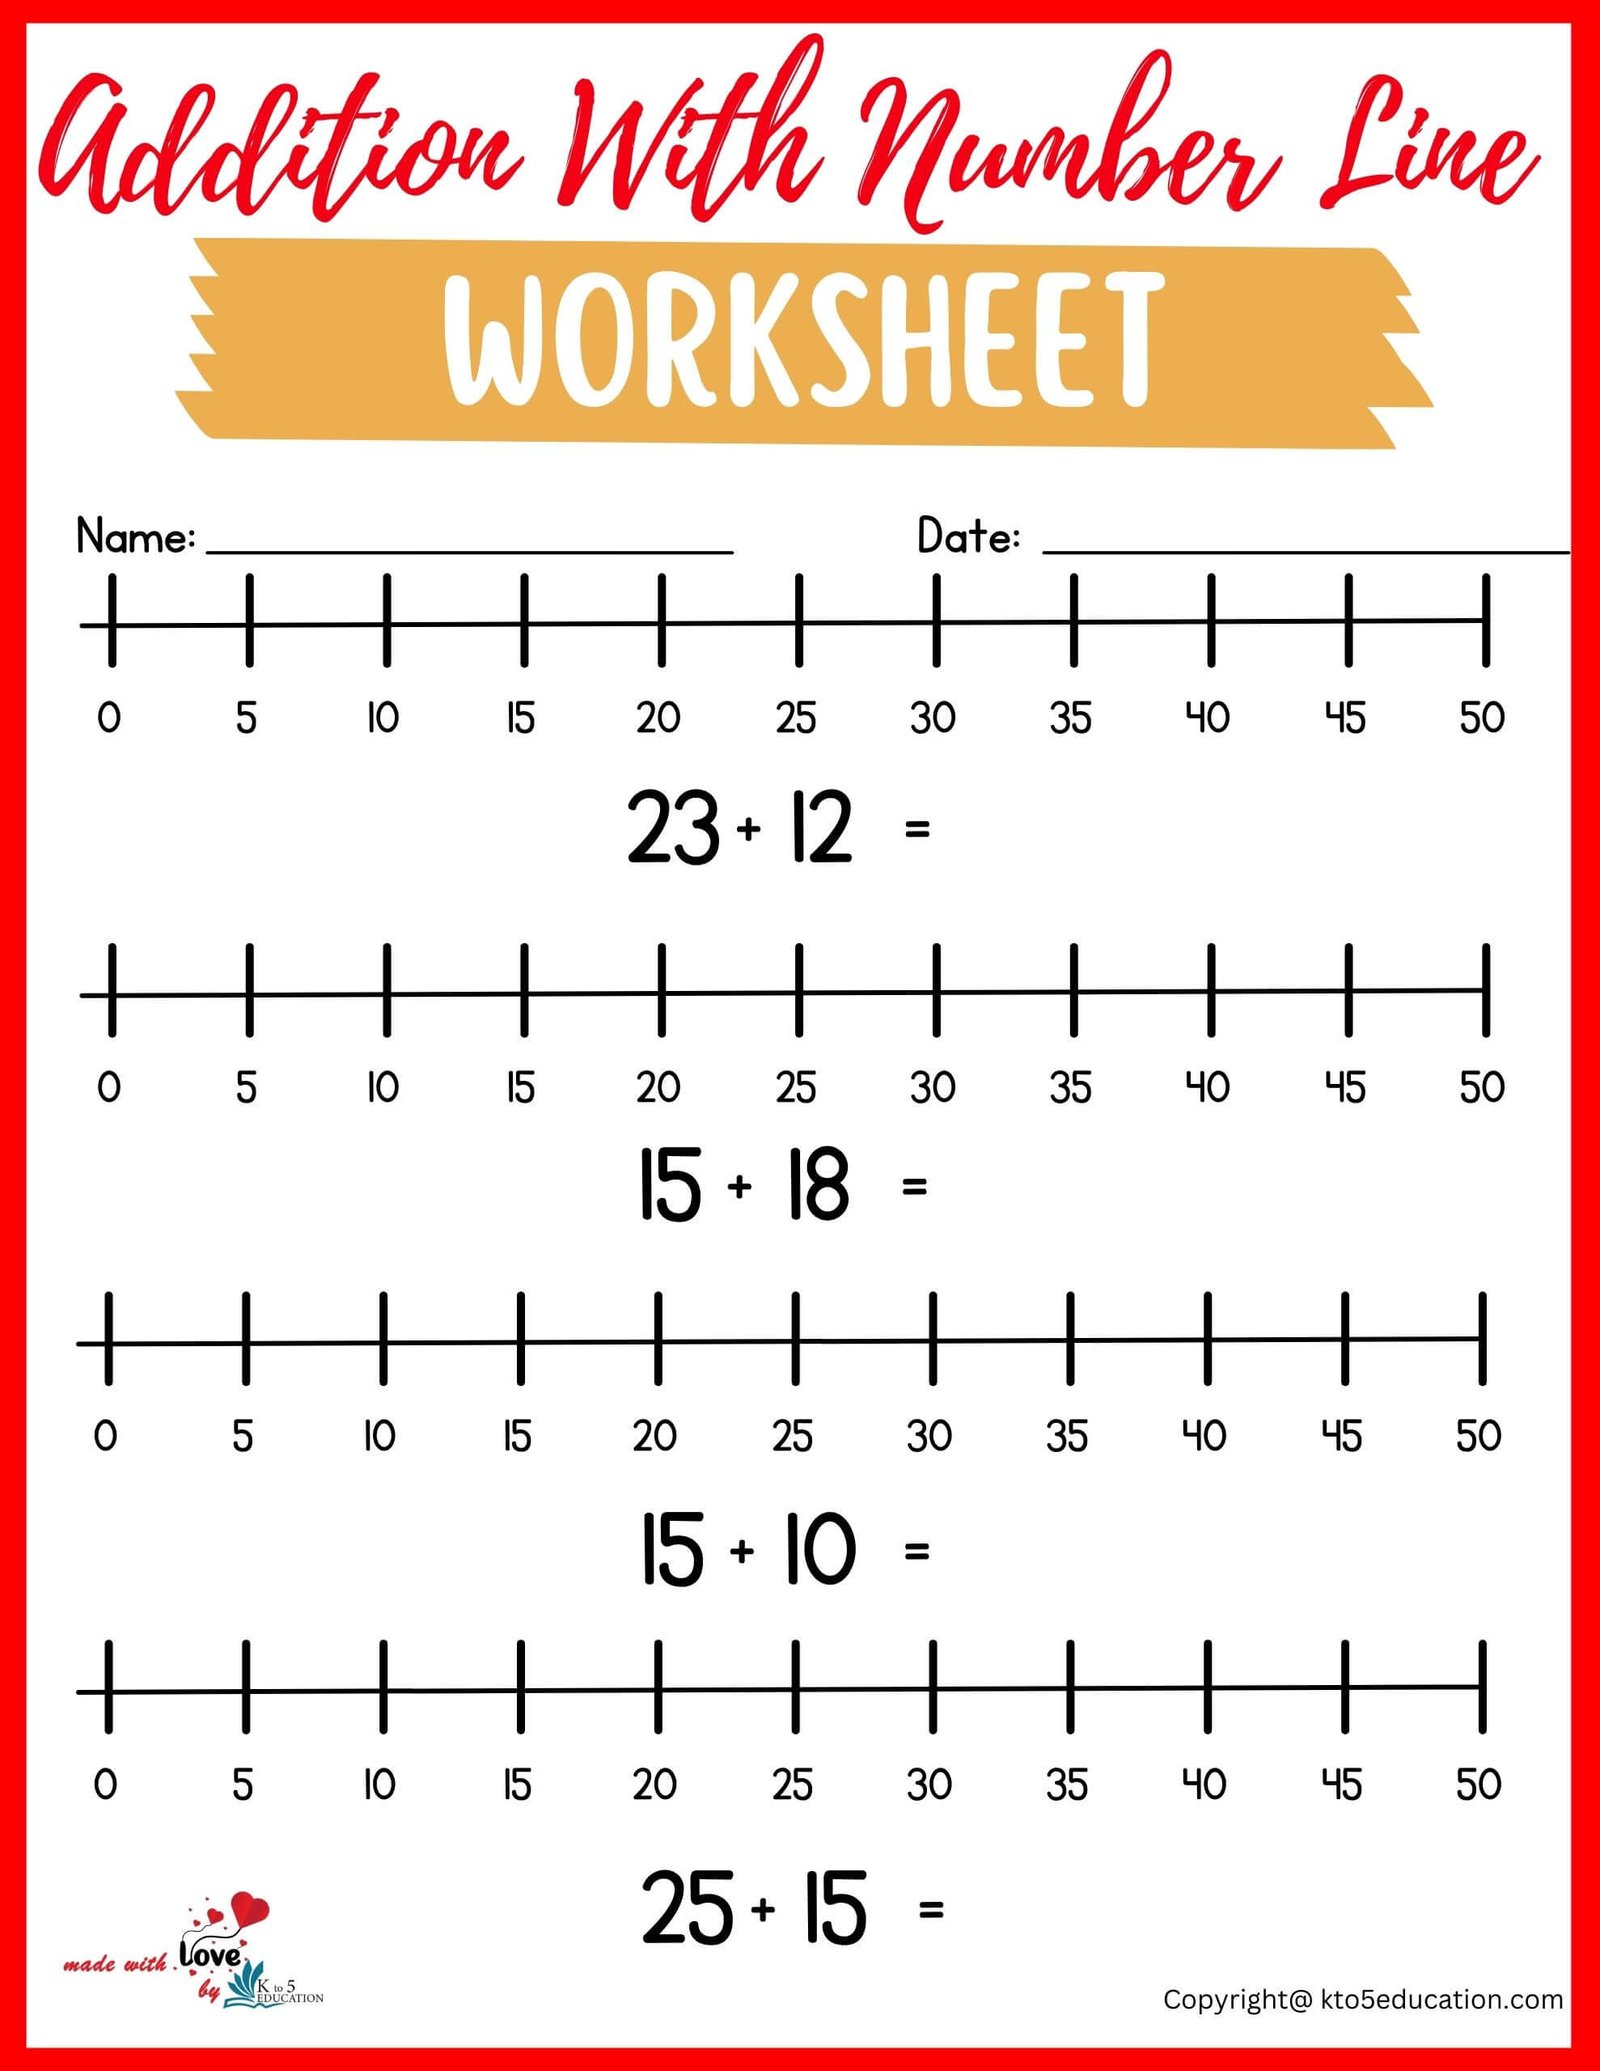 Addition With Number Line Worksheet 1-50 For 2nd Grade